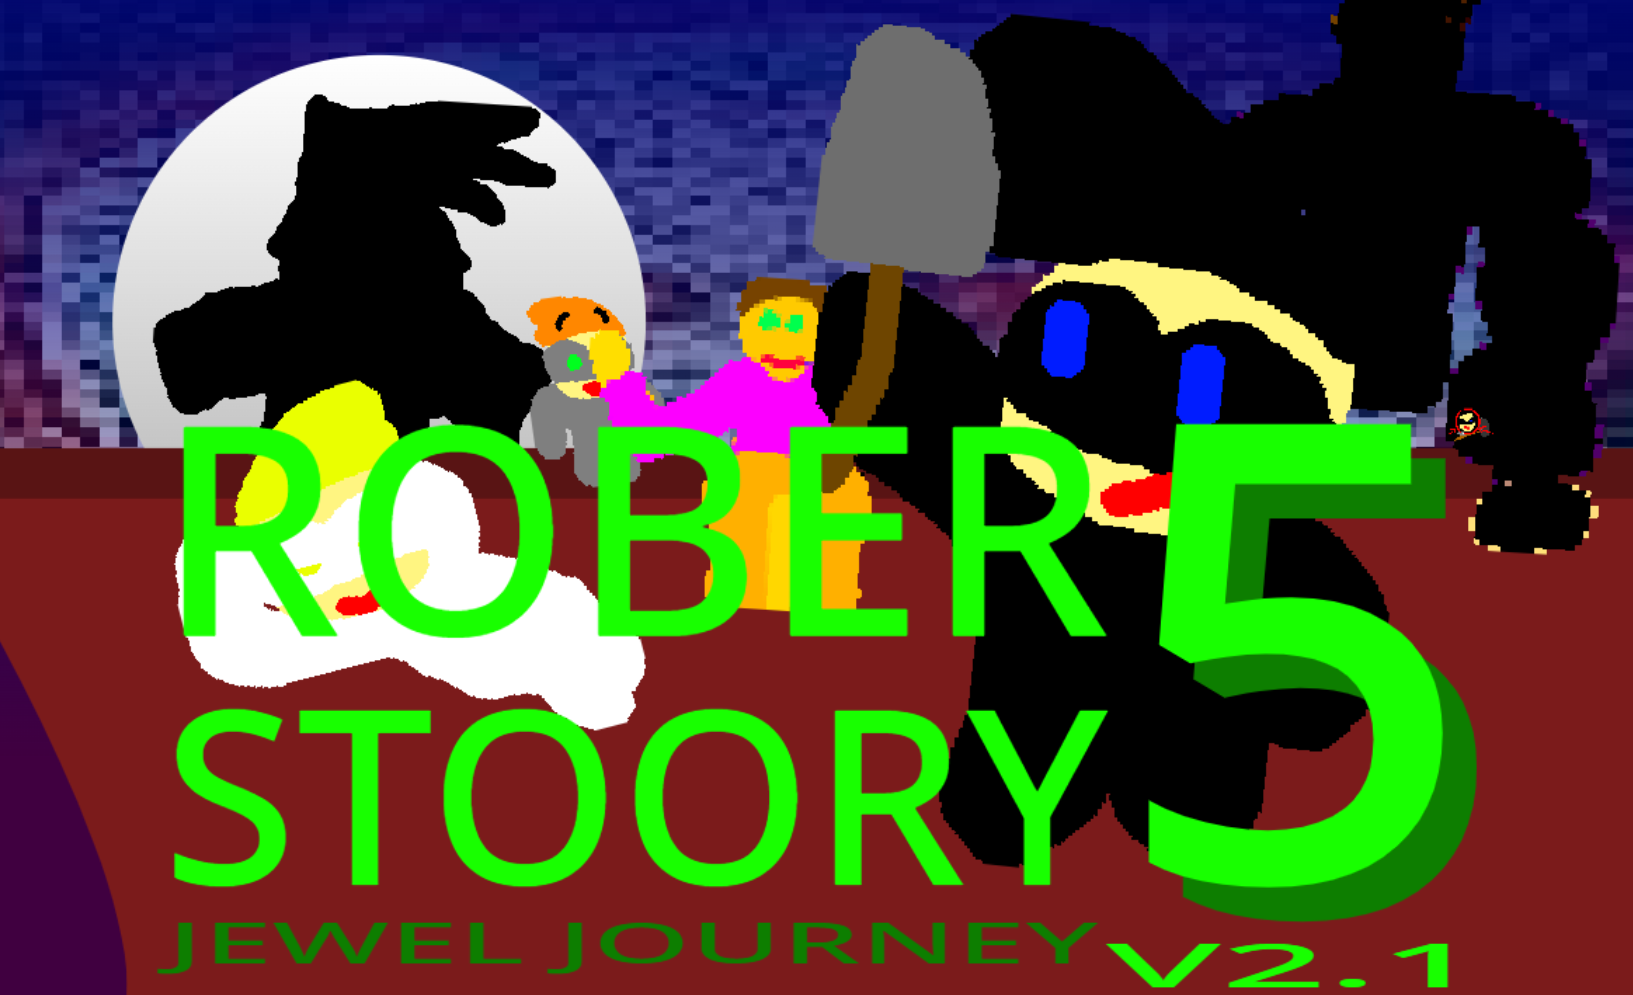 Rober Stoory 5 - Jewel Journey